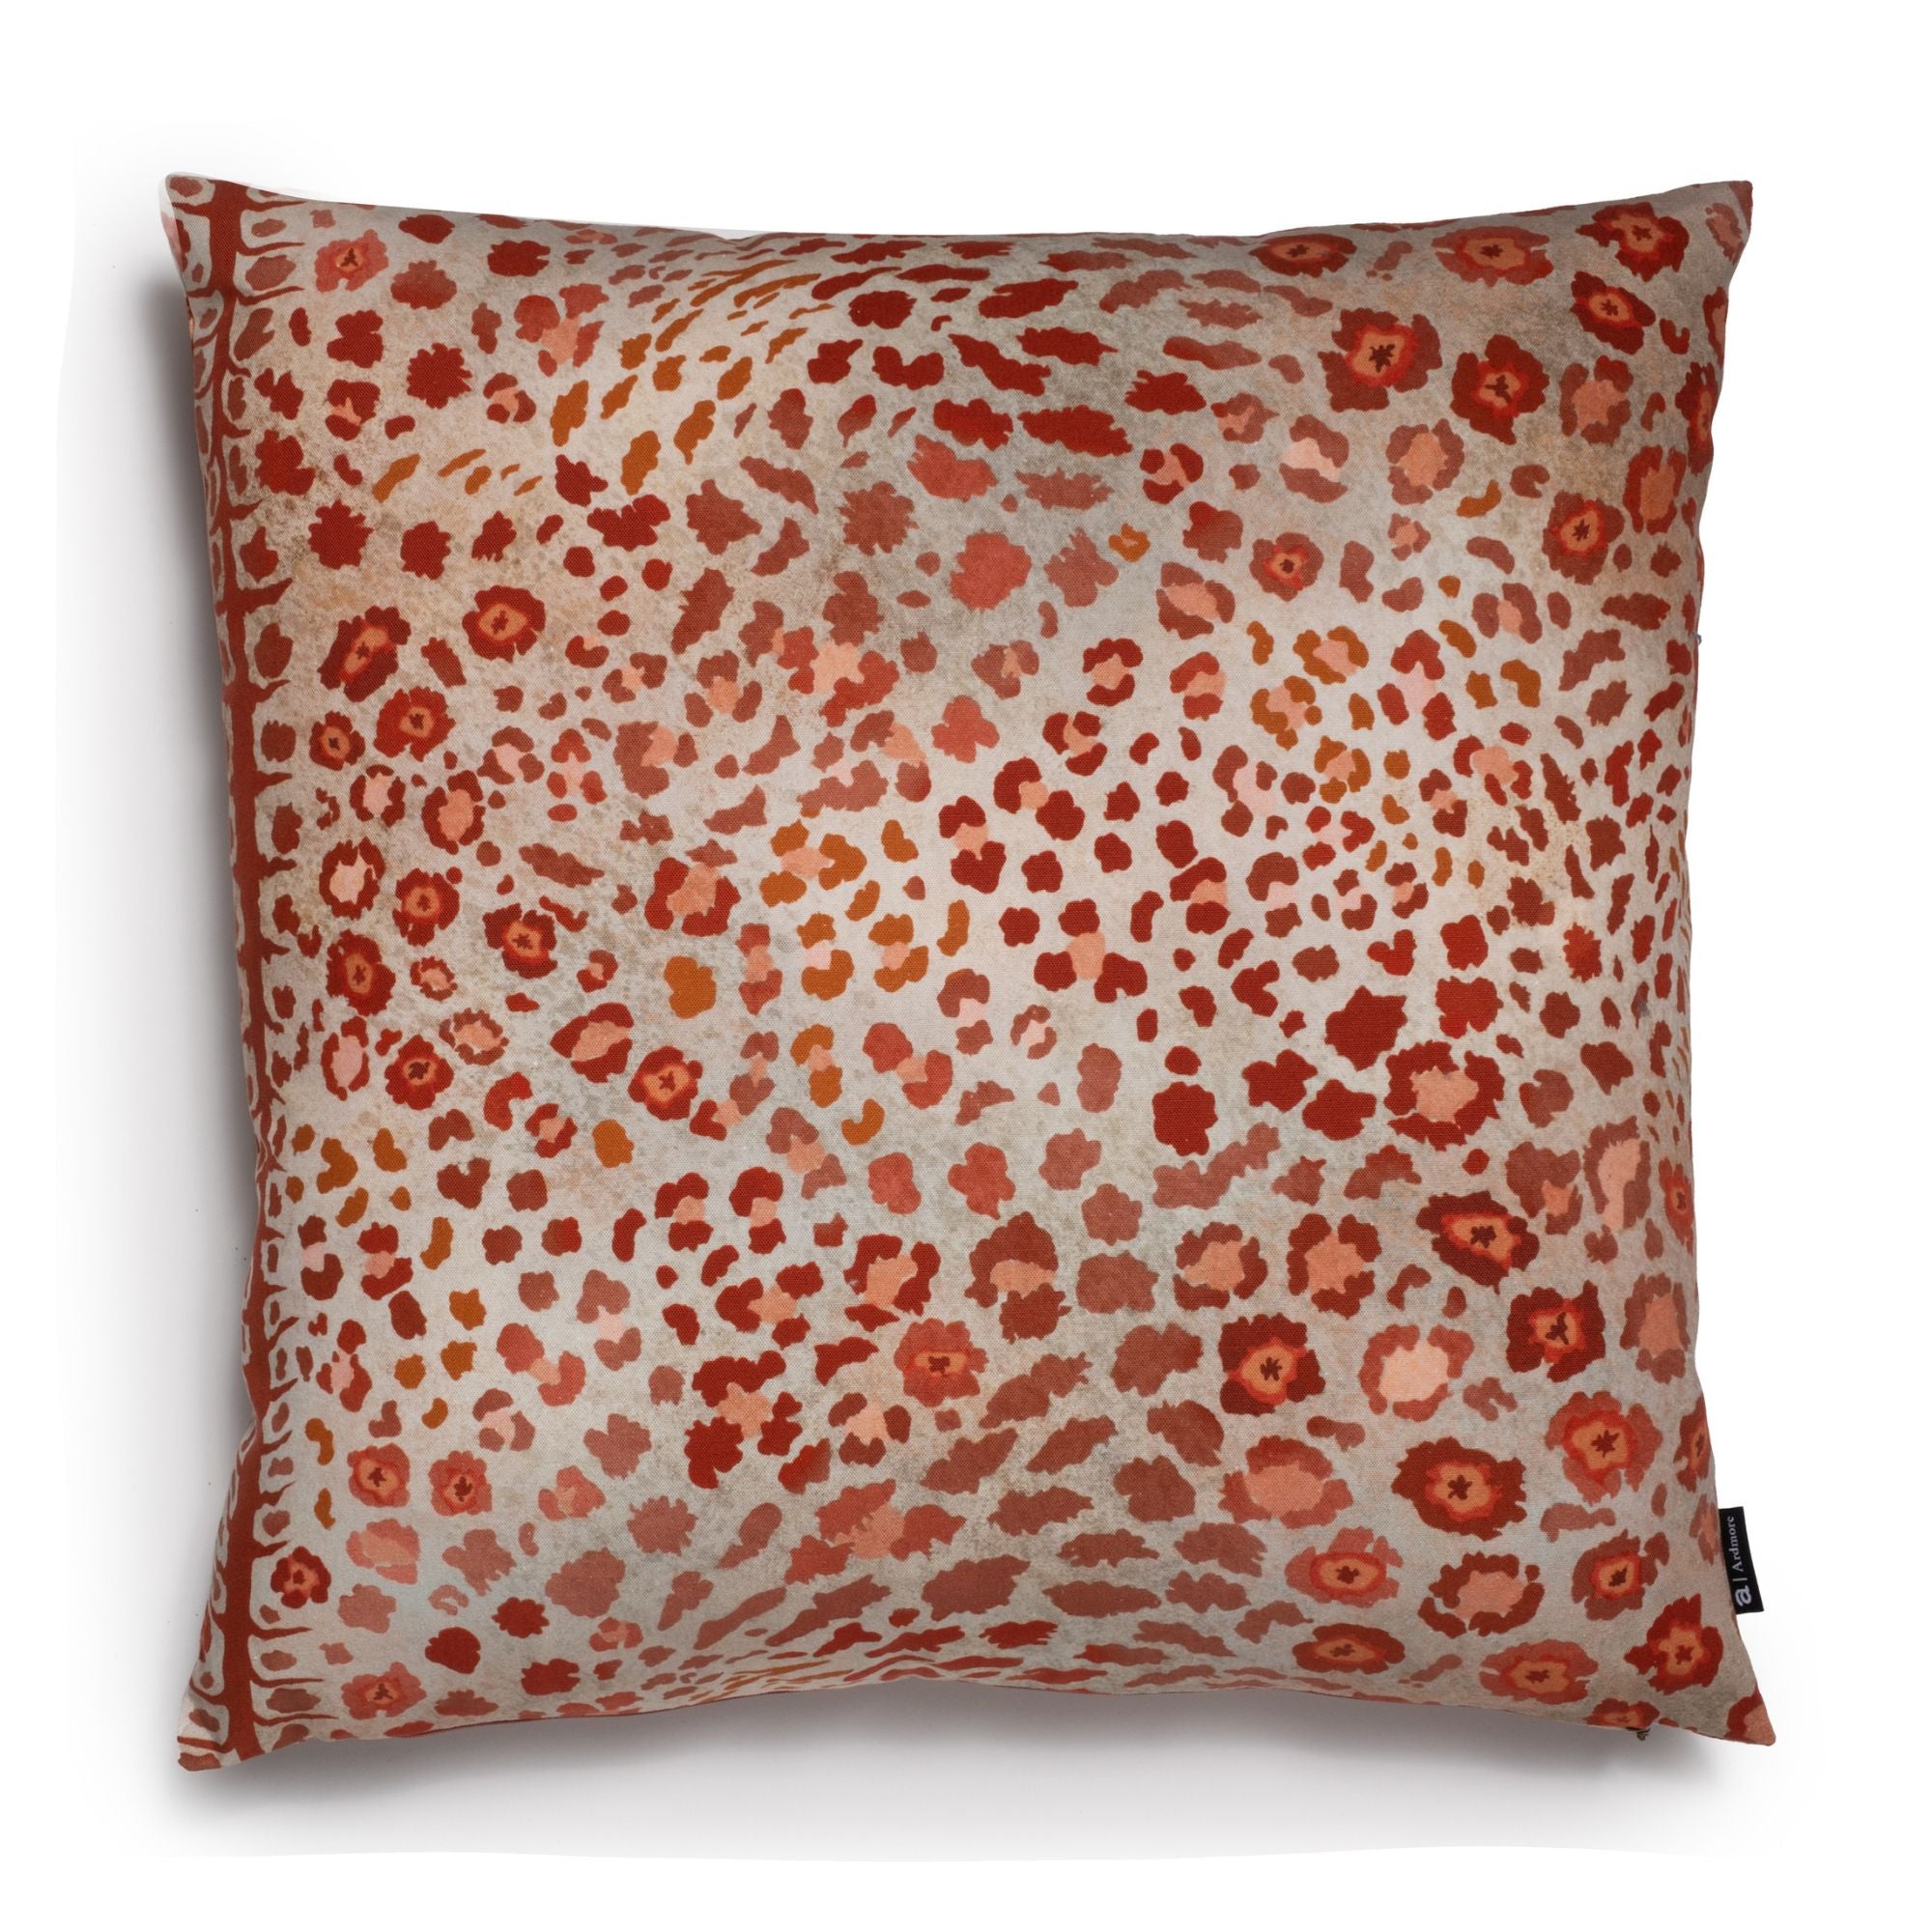 Safari Spot Pillow - Cotton - Coral